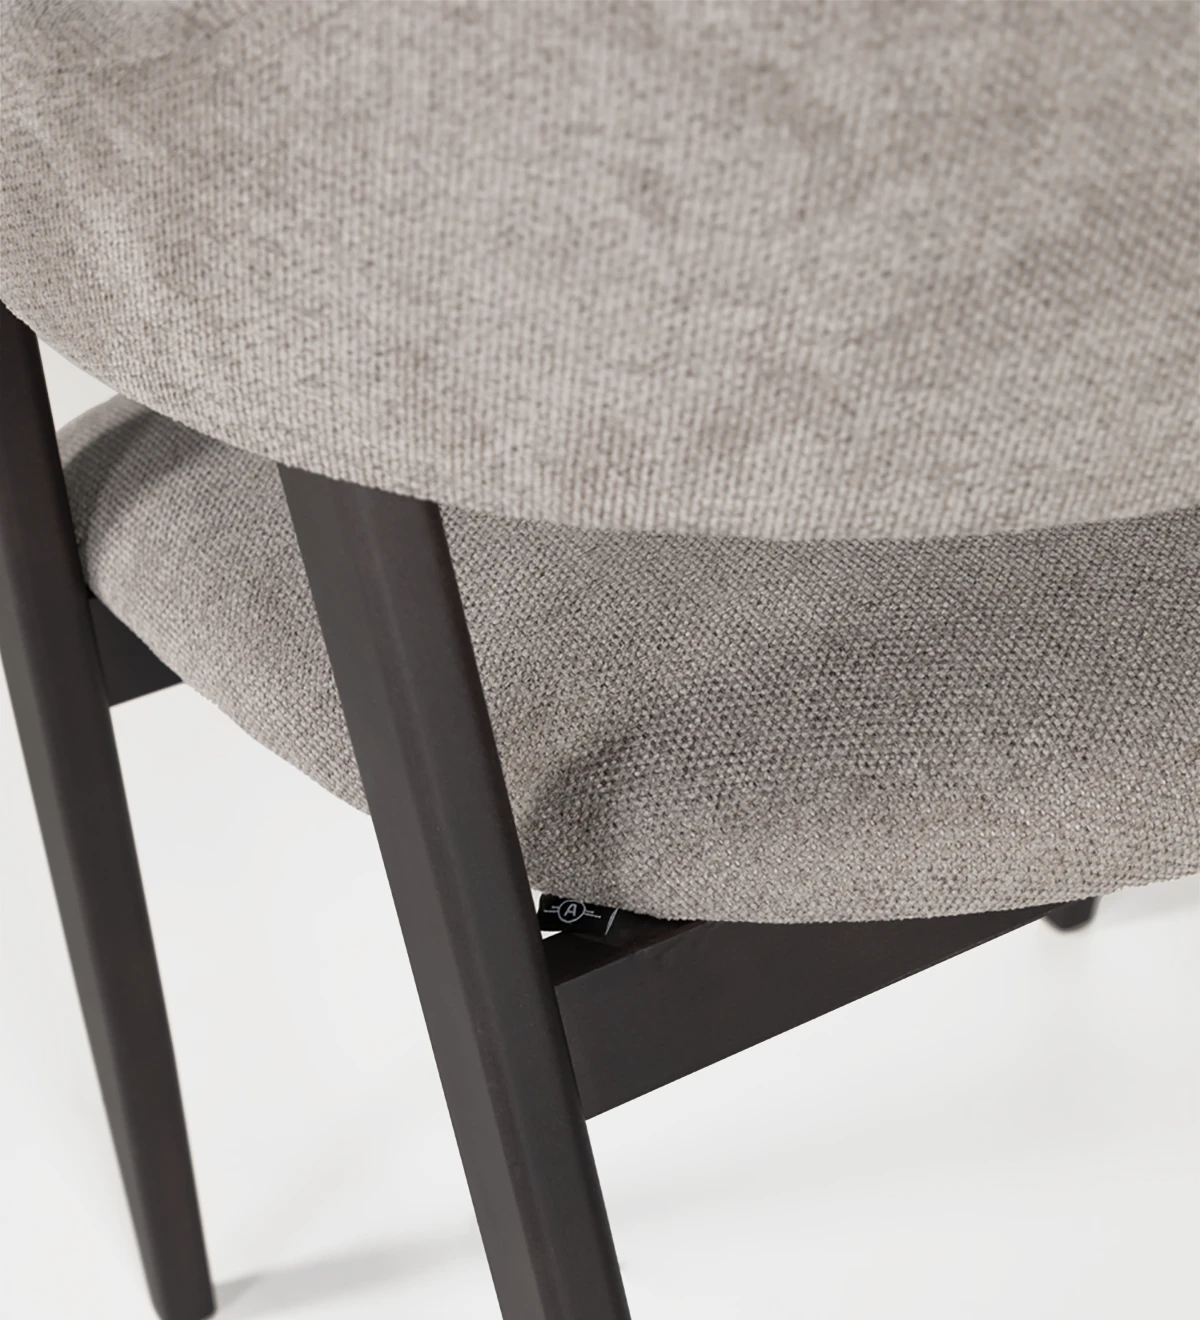 Silla de madera de fresno marrón oscuro con con brazos, asiento y respaldo tapizados en tejido.